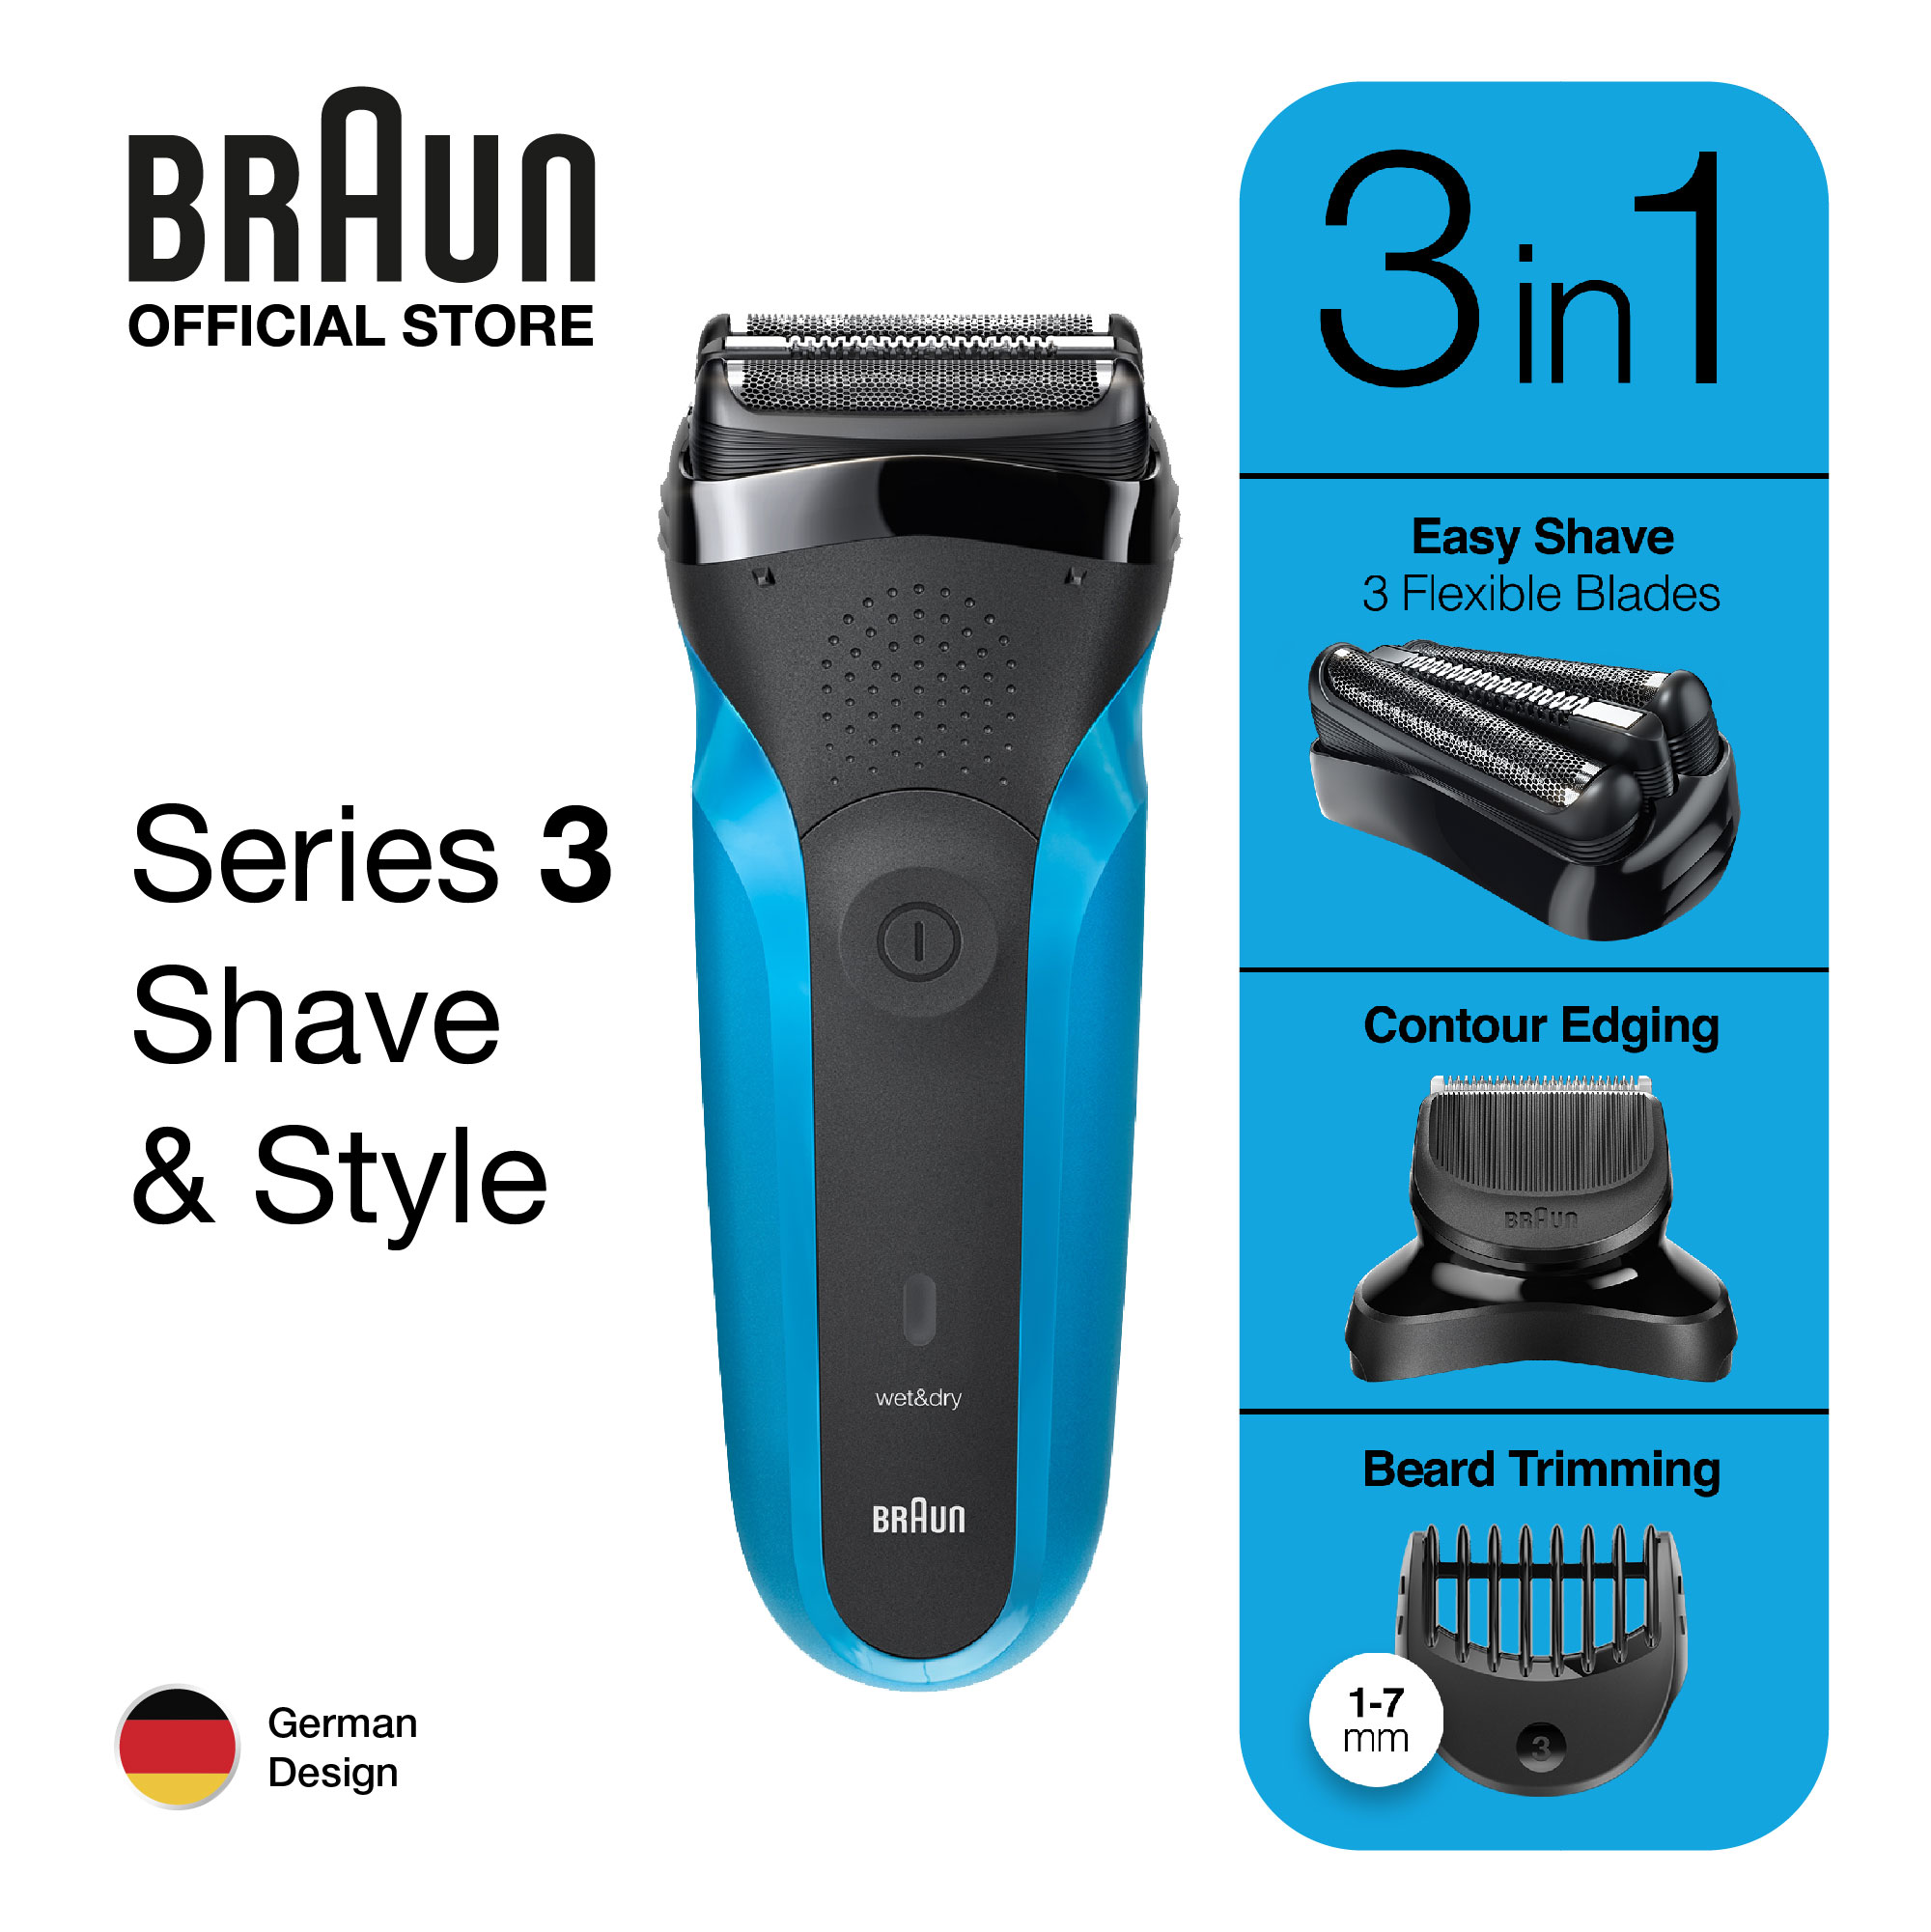 Buy Braun Series 3 Shaver online | Lazada.com.ph